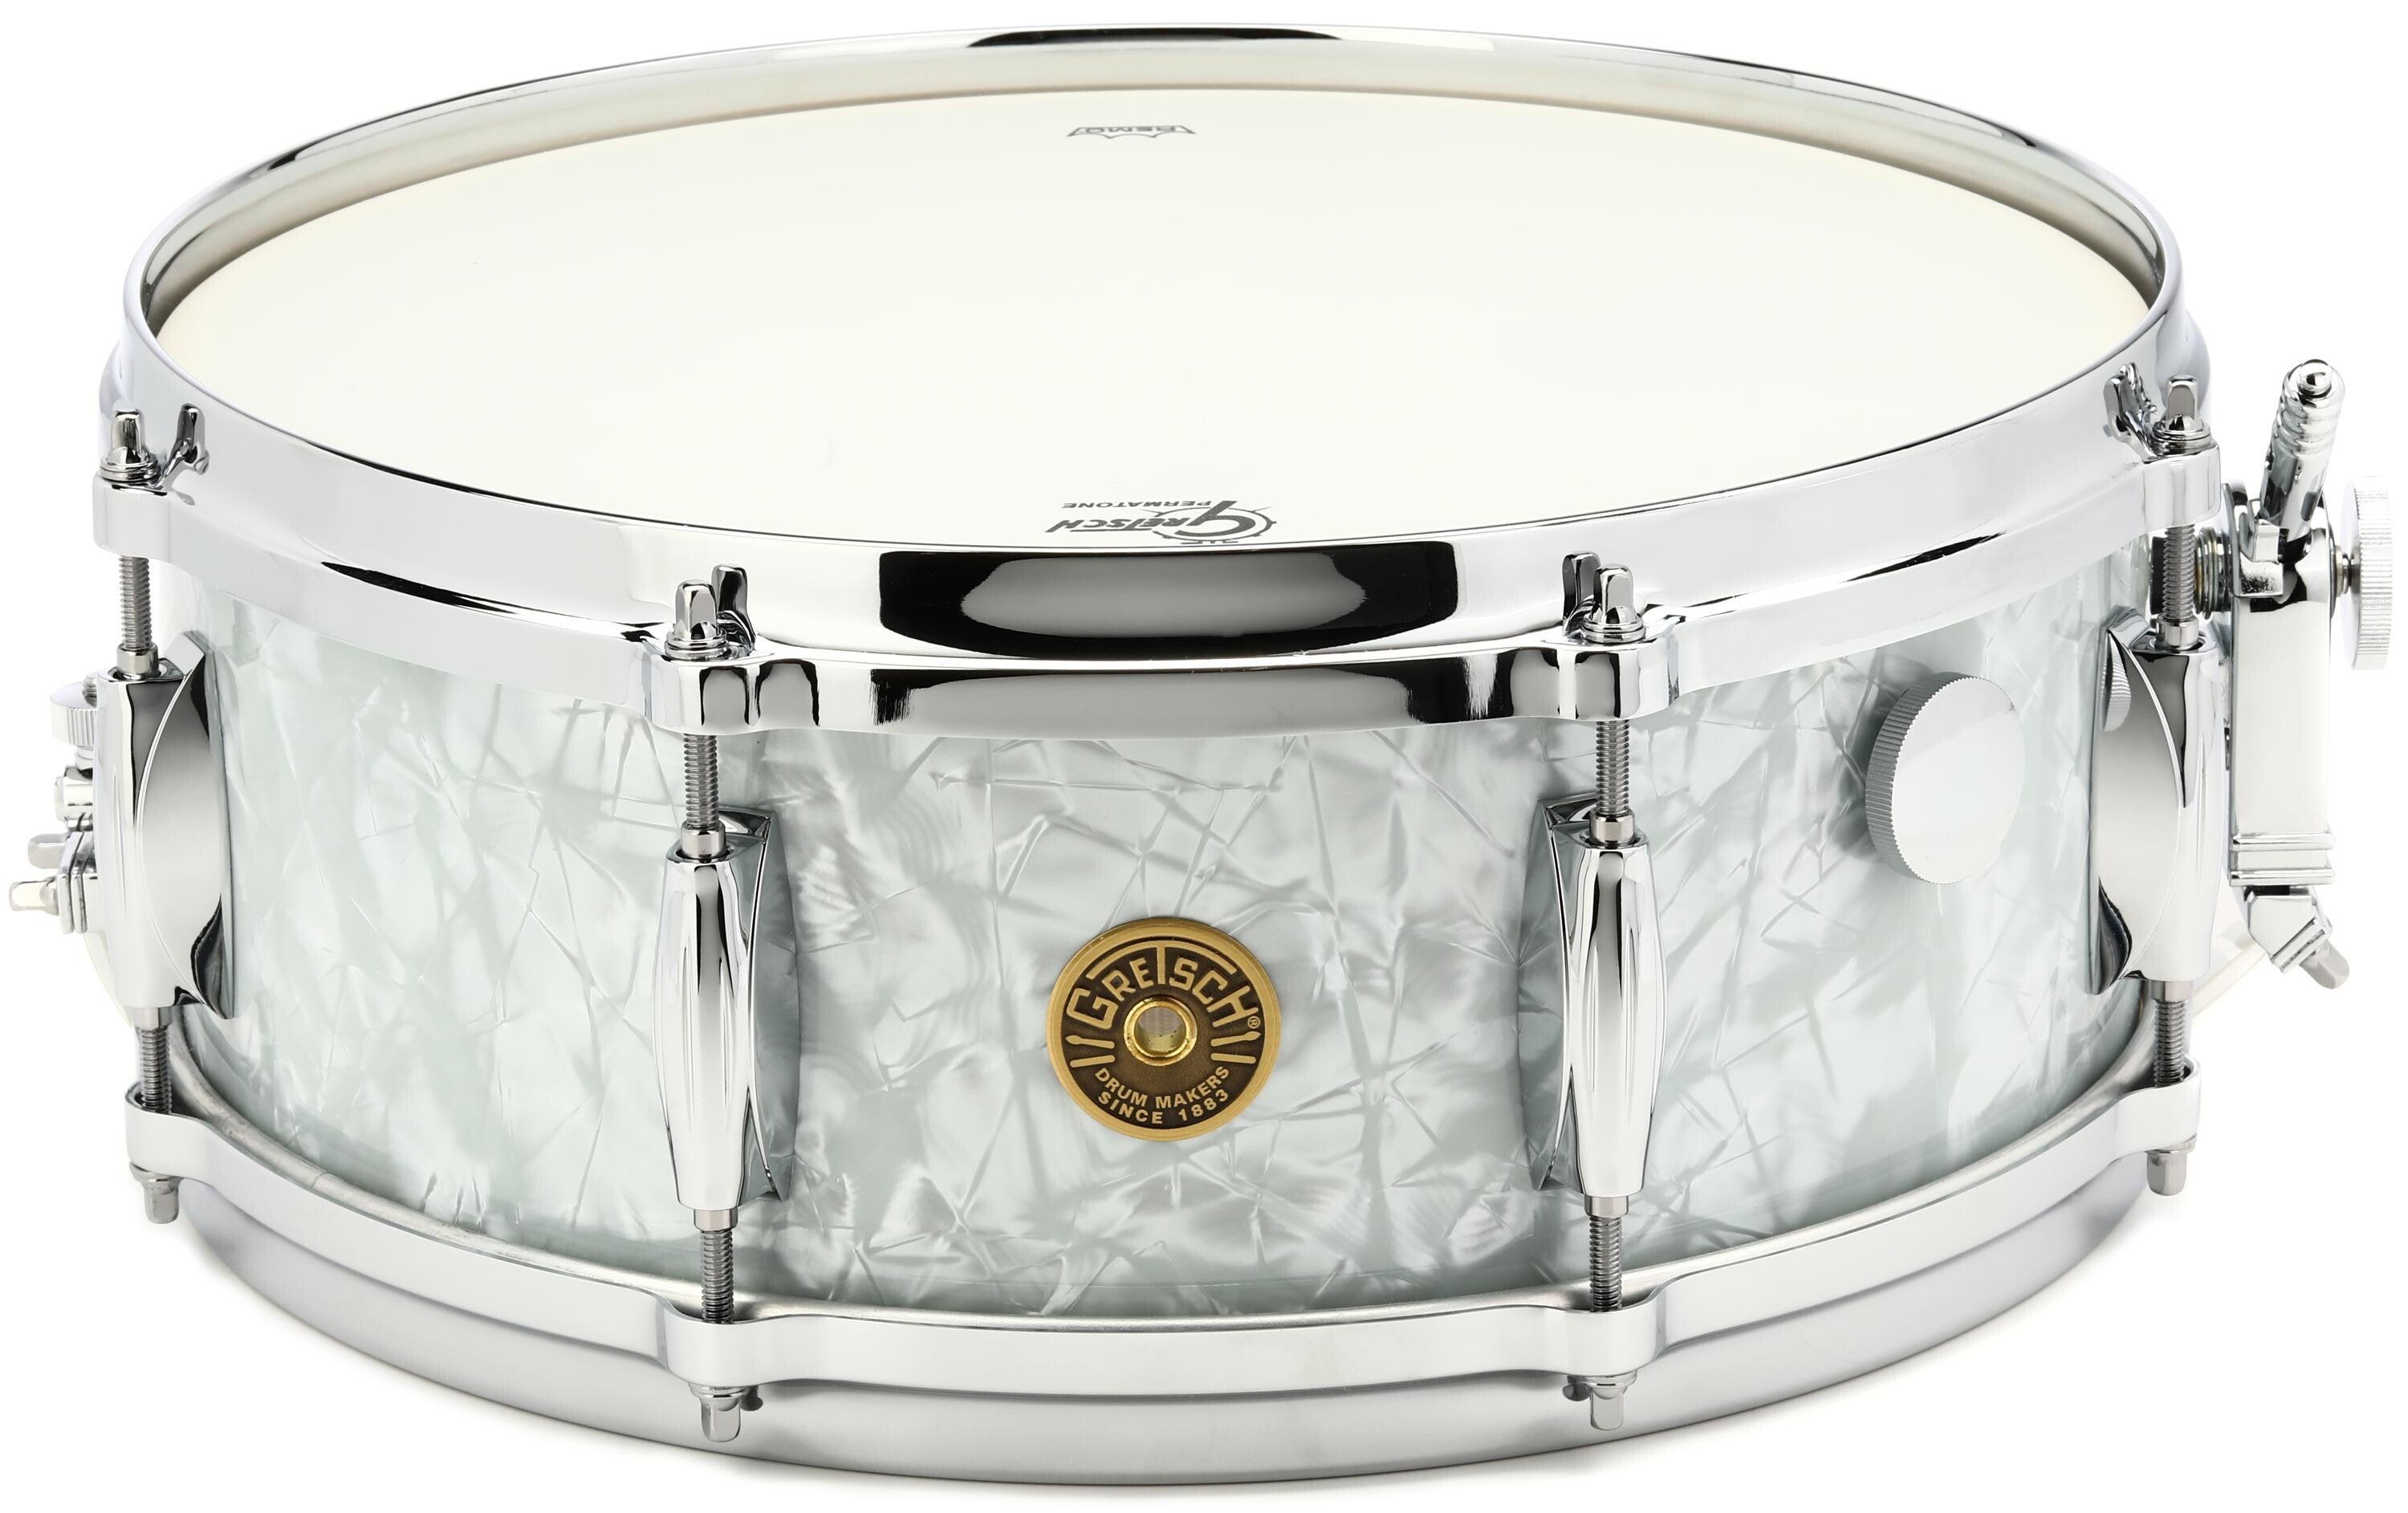 Gretsch Drums USA Custom Series Snare Drum - 5.5-inch x 14-inch